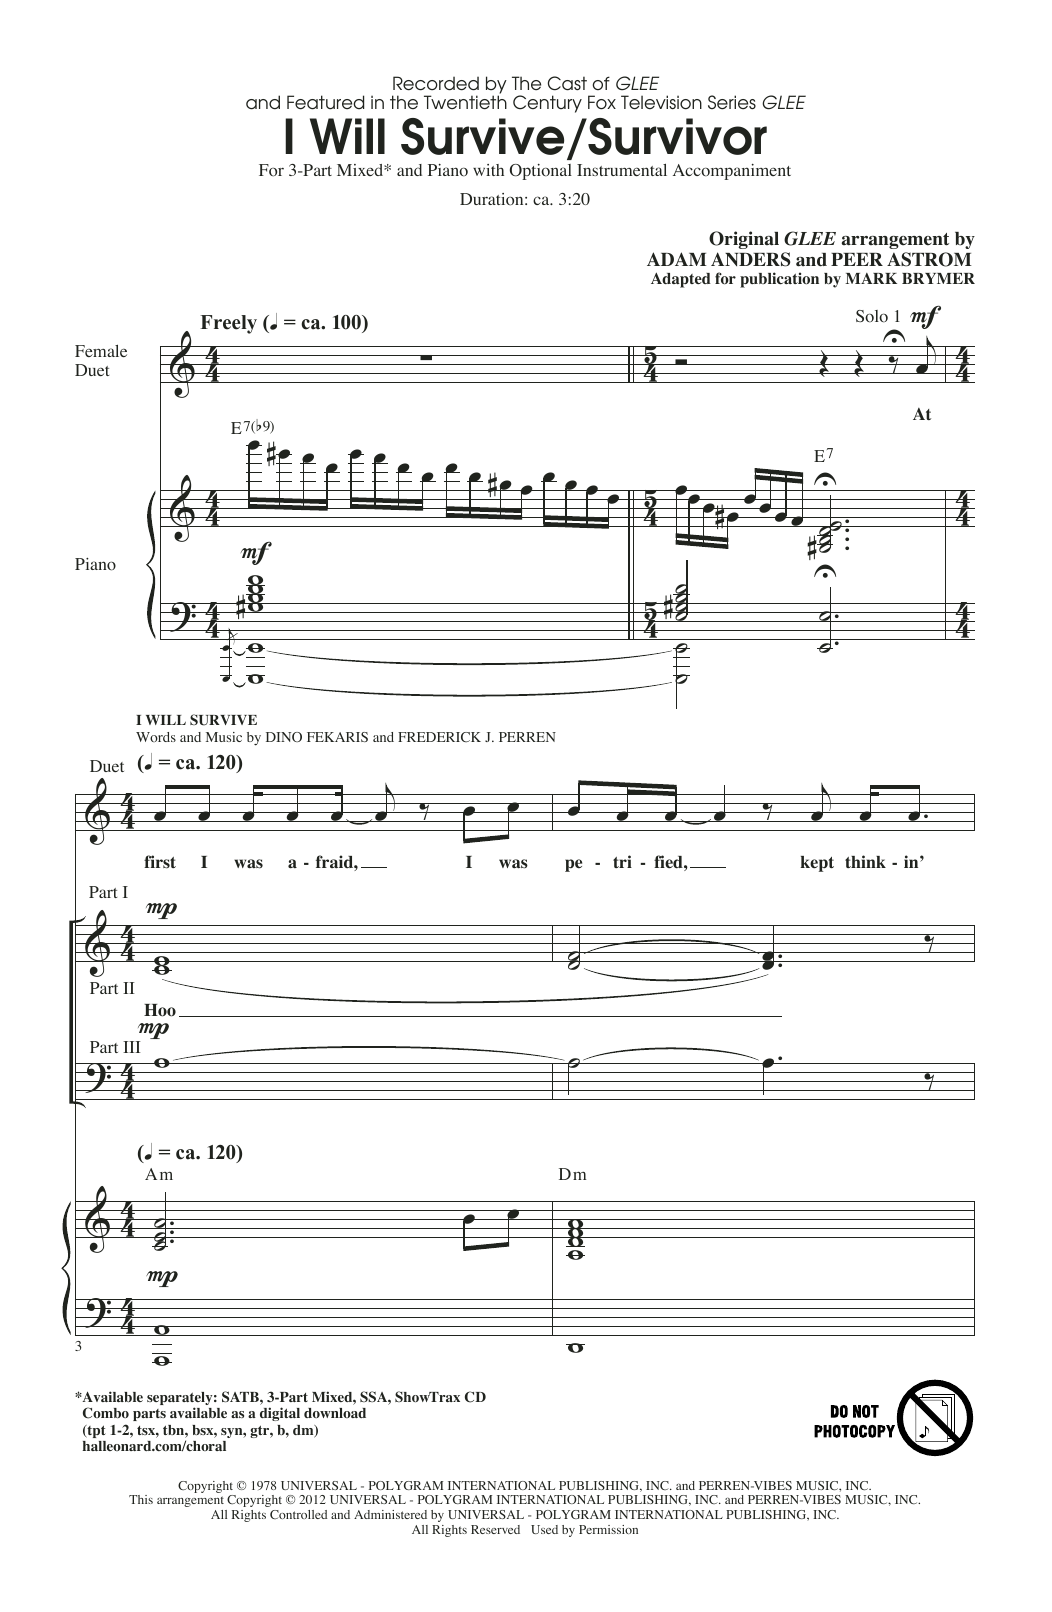 Glee Cast I Will Survive/Survivor (arr. Mark Brymer) Sheet Music Notes & Chords for SATB Choir - Download or Print PDF